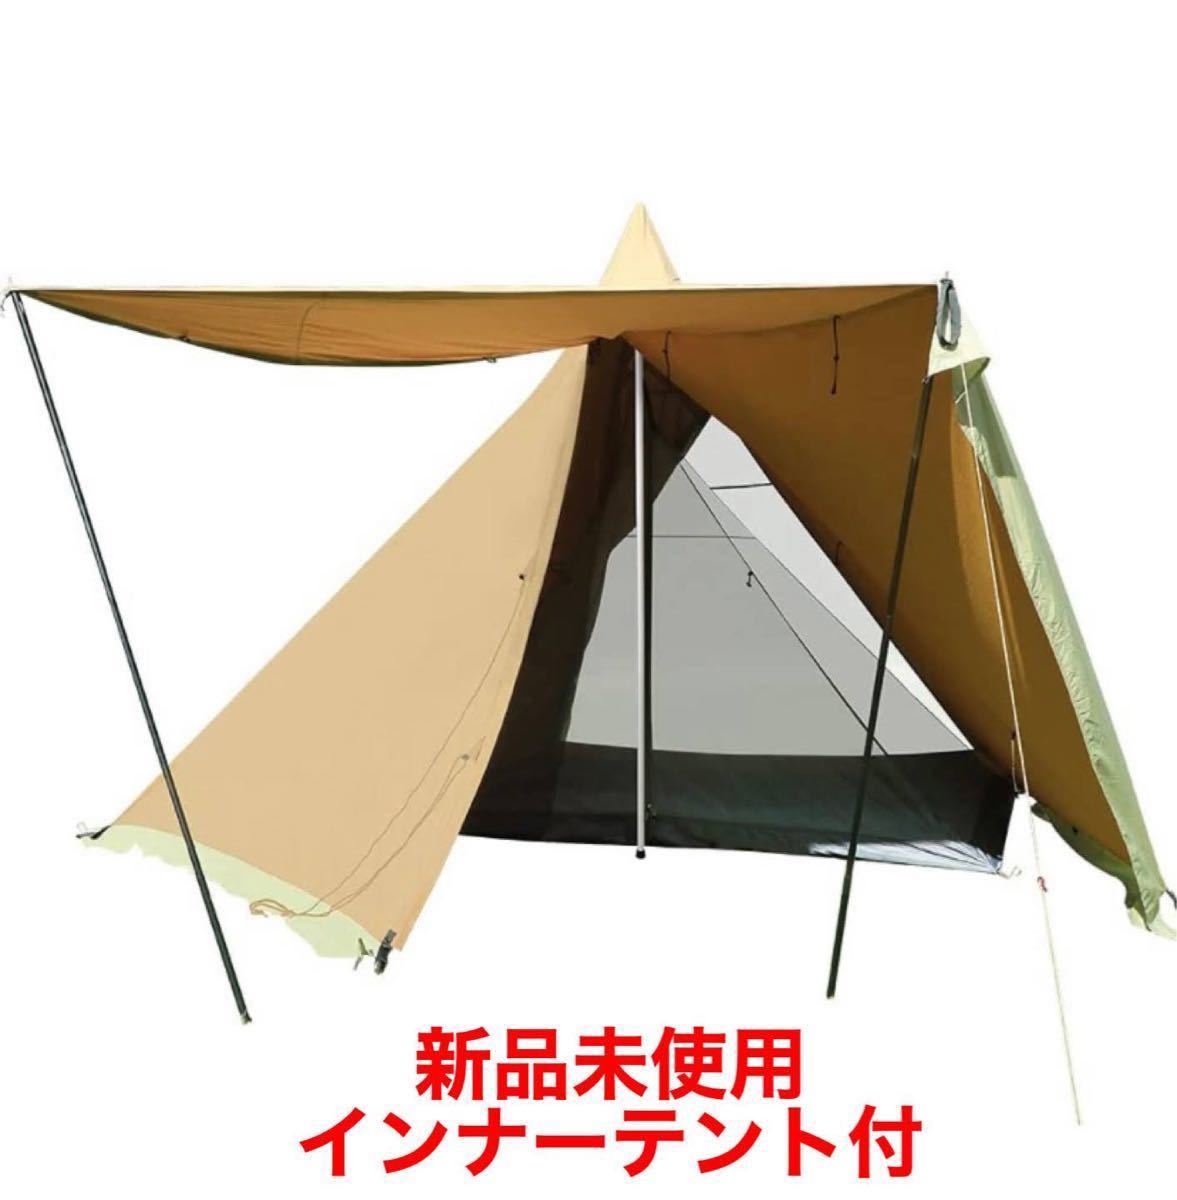 SoomloomテントHAPI 4P+inner tent-